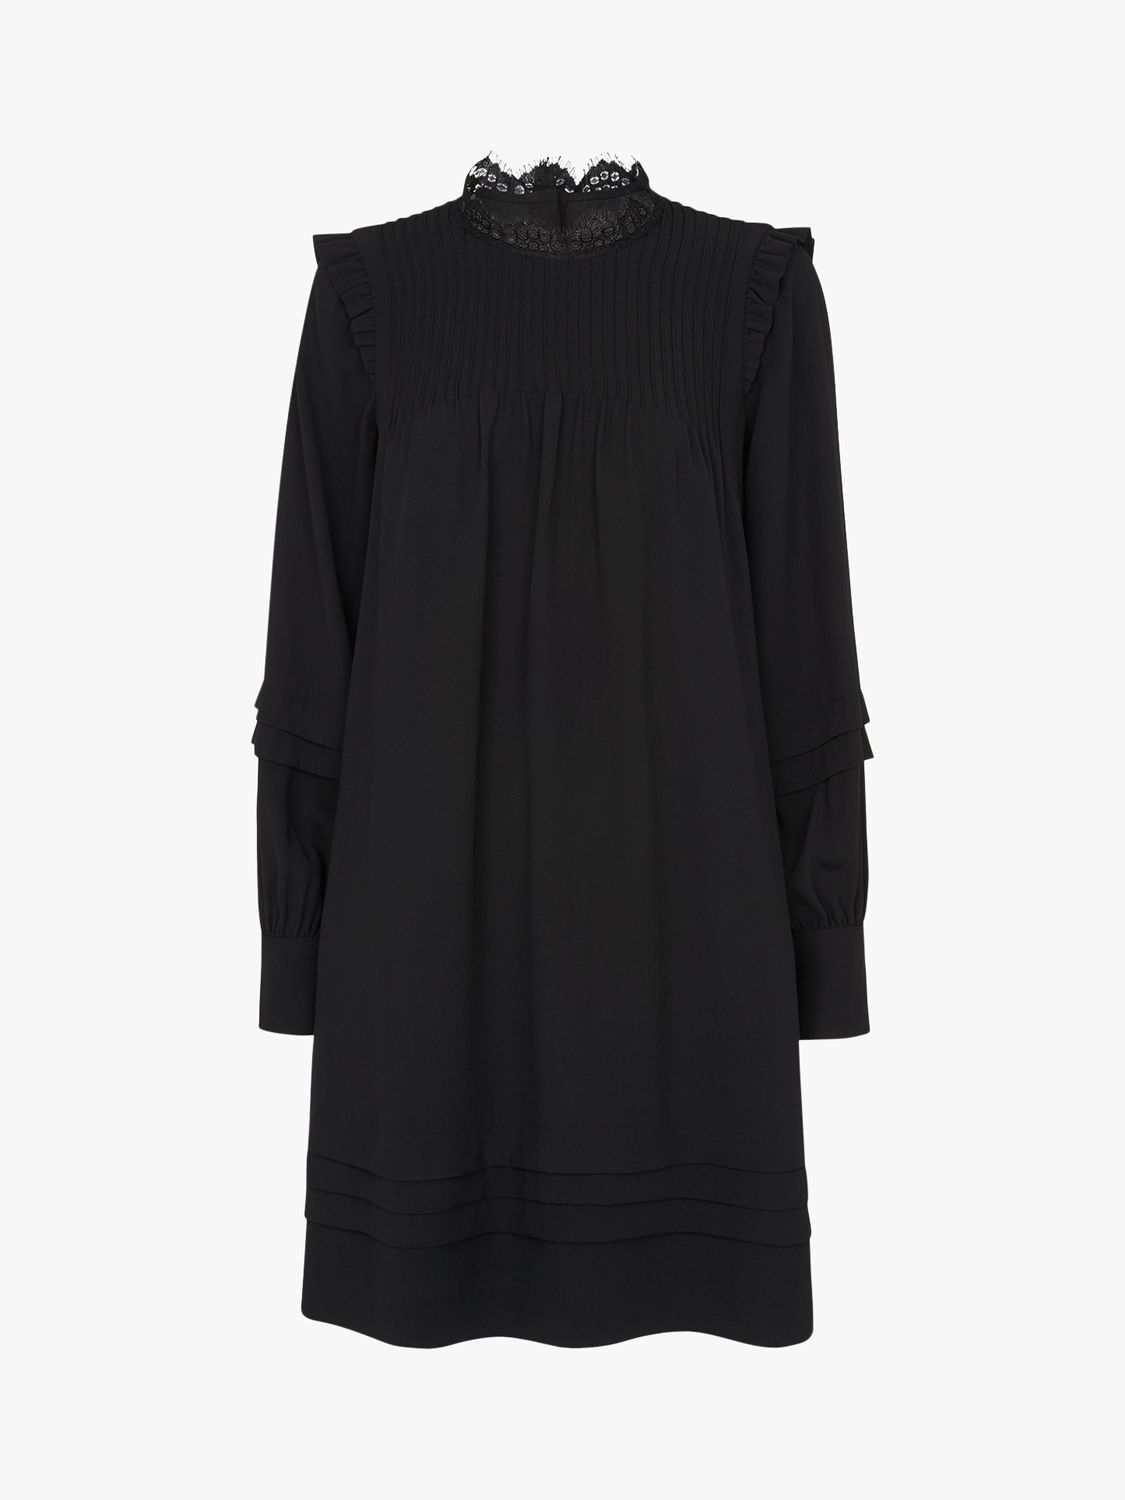 Whistles Pintuck Lace Detail Smock Dress, Black at John Lewis & Partners